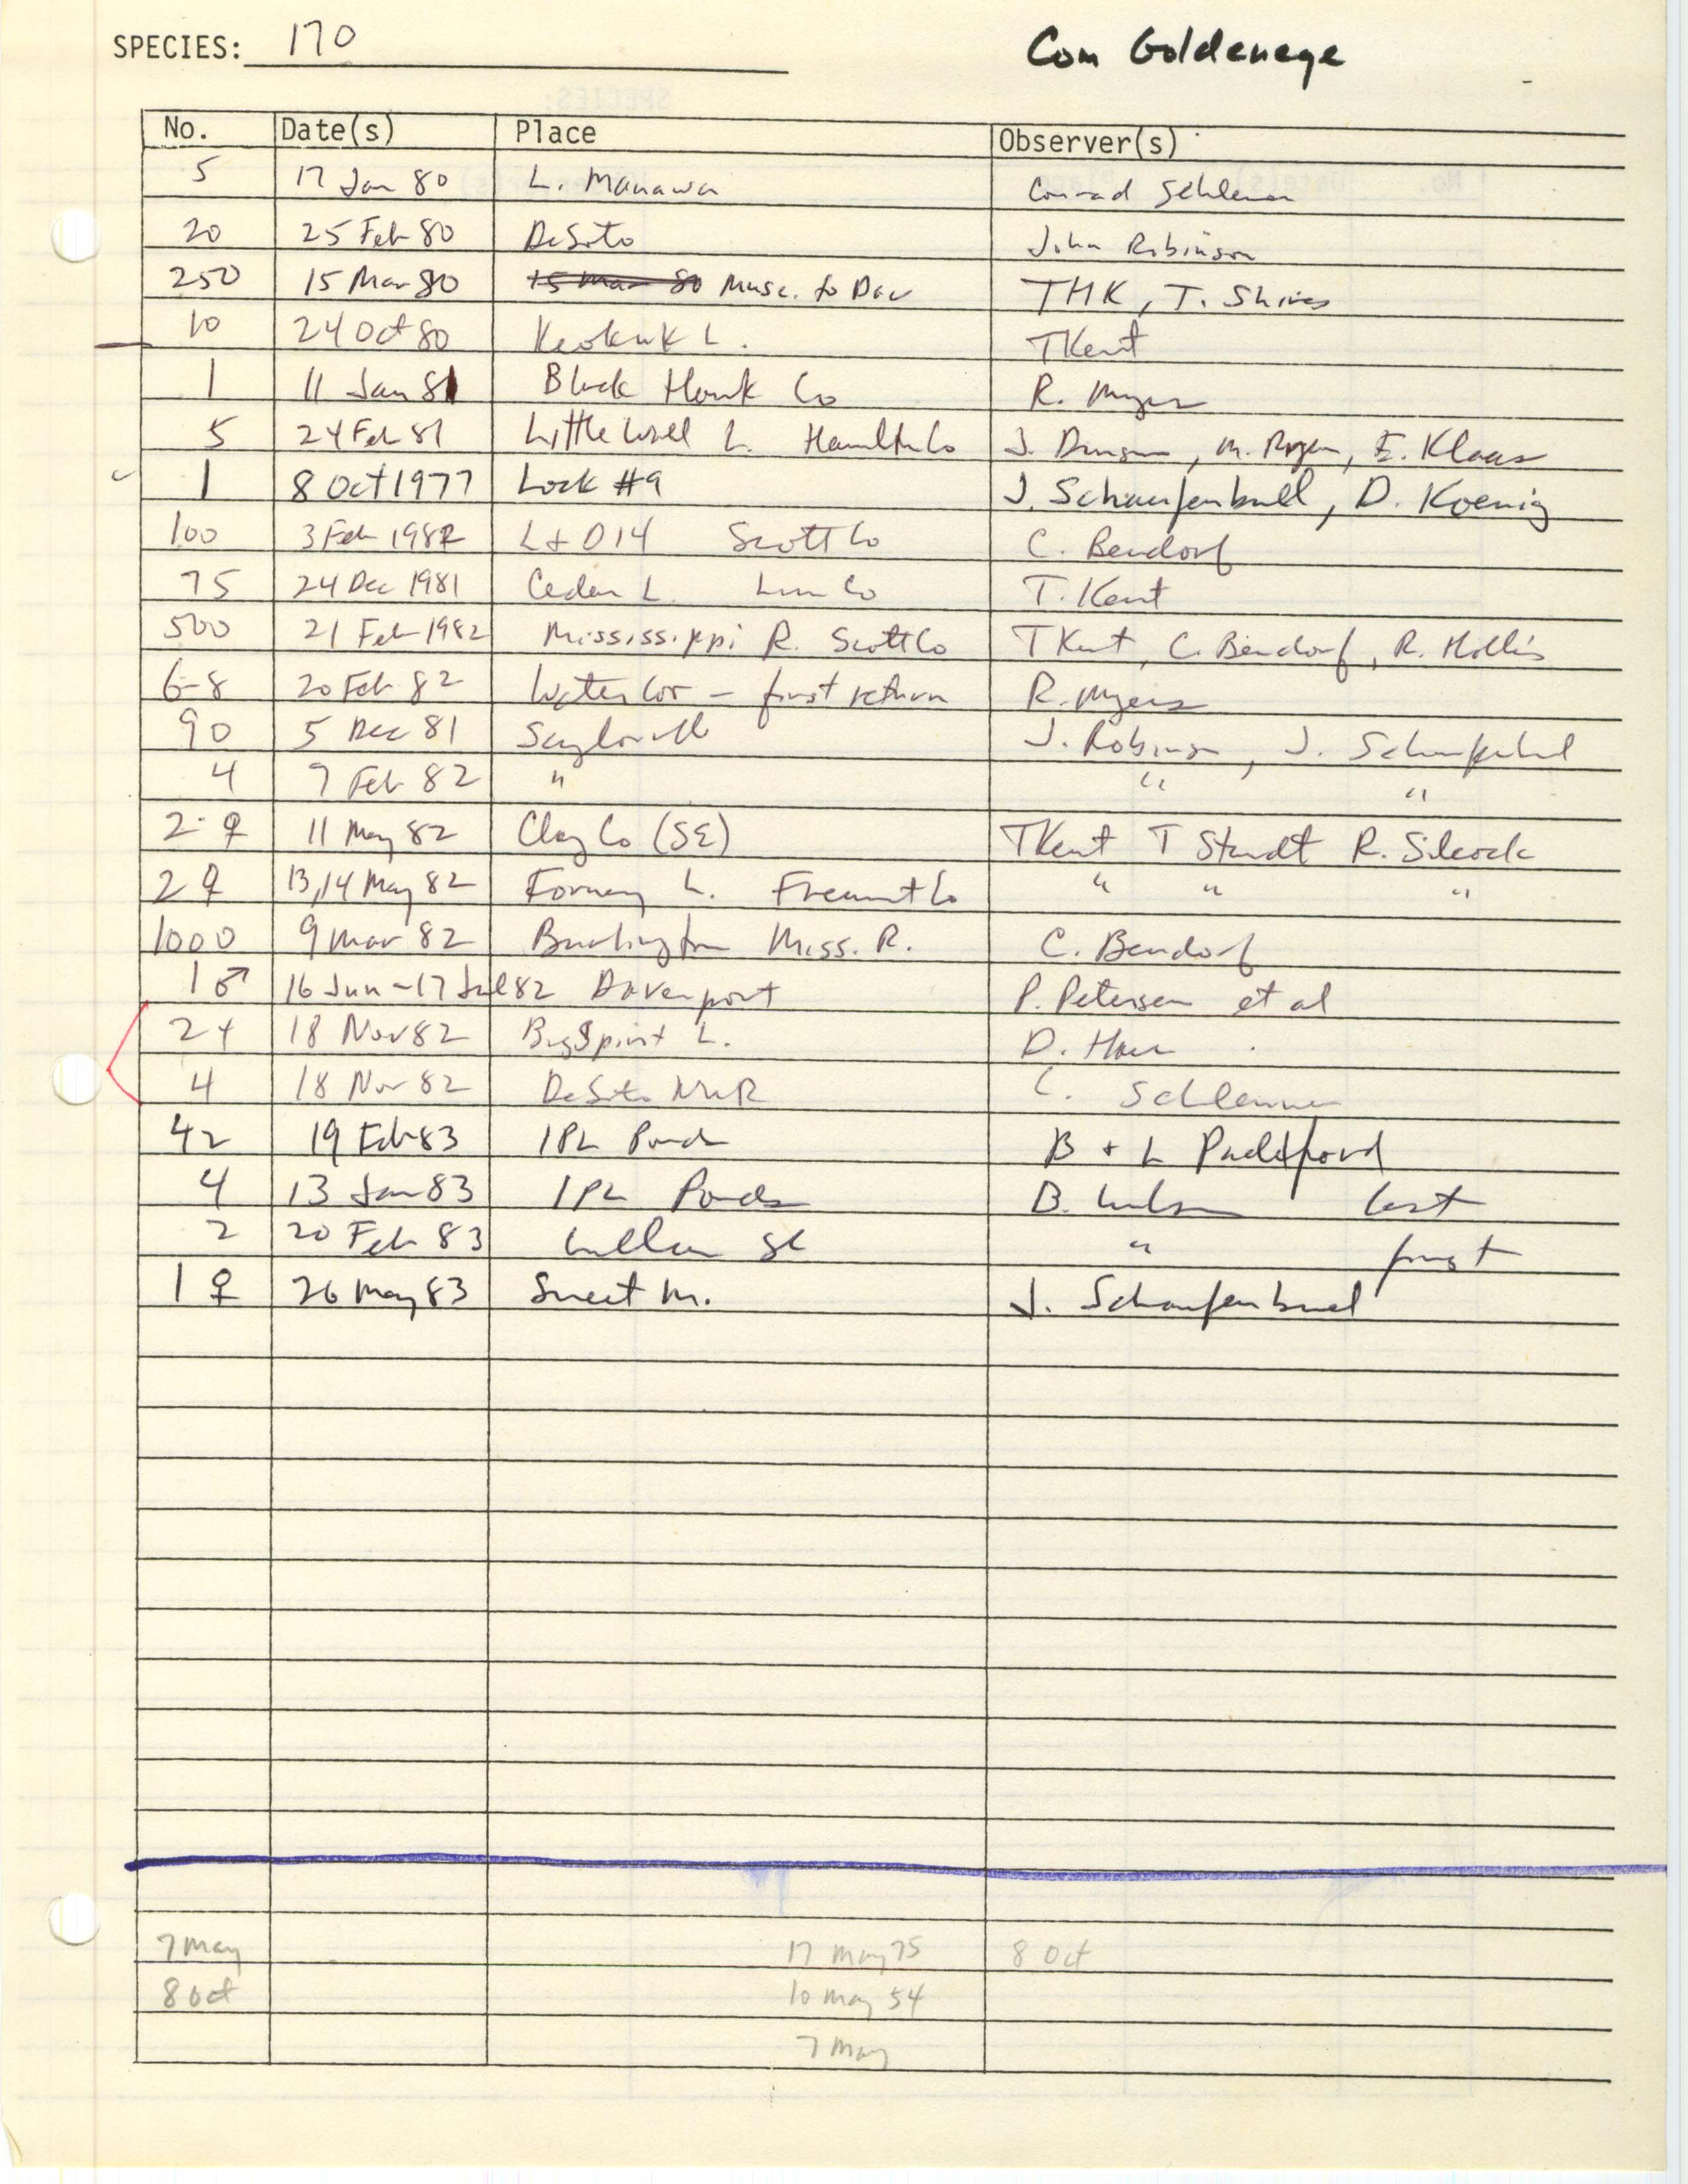 Iowa Ornithologists' Union, field report compiled data, Common Goldeneye, 1954-1983